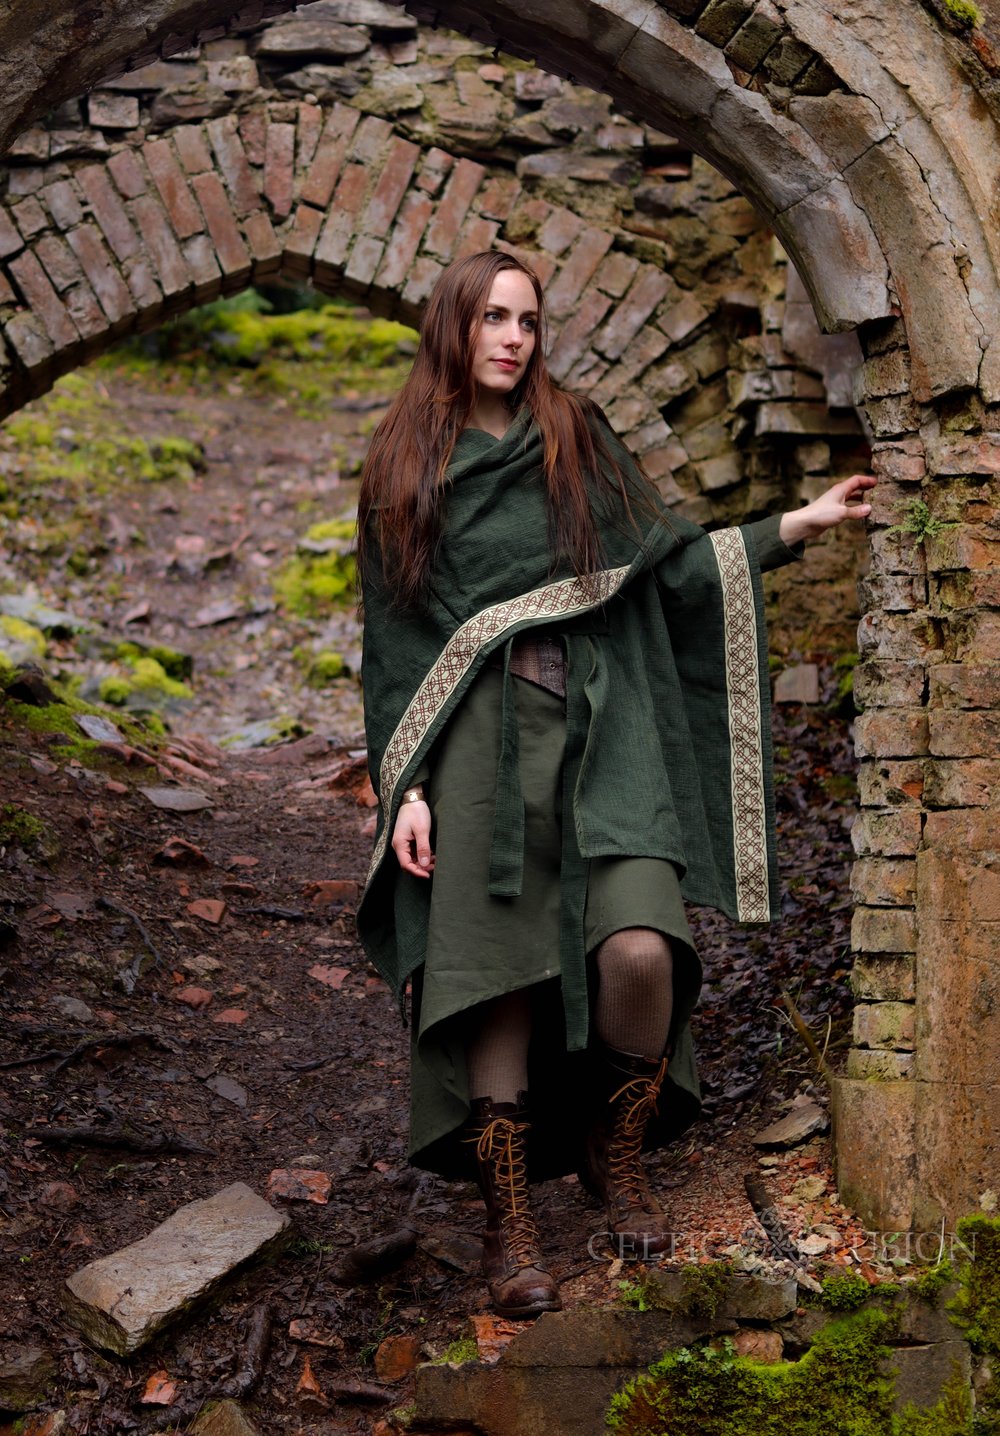 Dagda Cape. Cloak Women, Mens Cloak — Celtic Fusion ~ Folklore Clothing